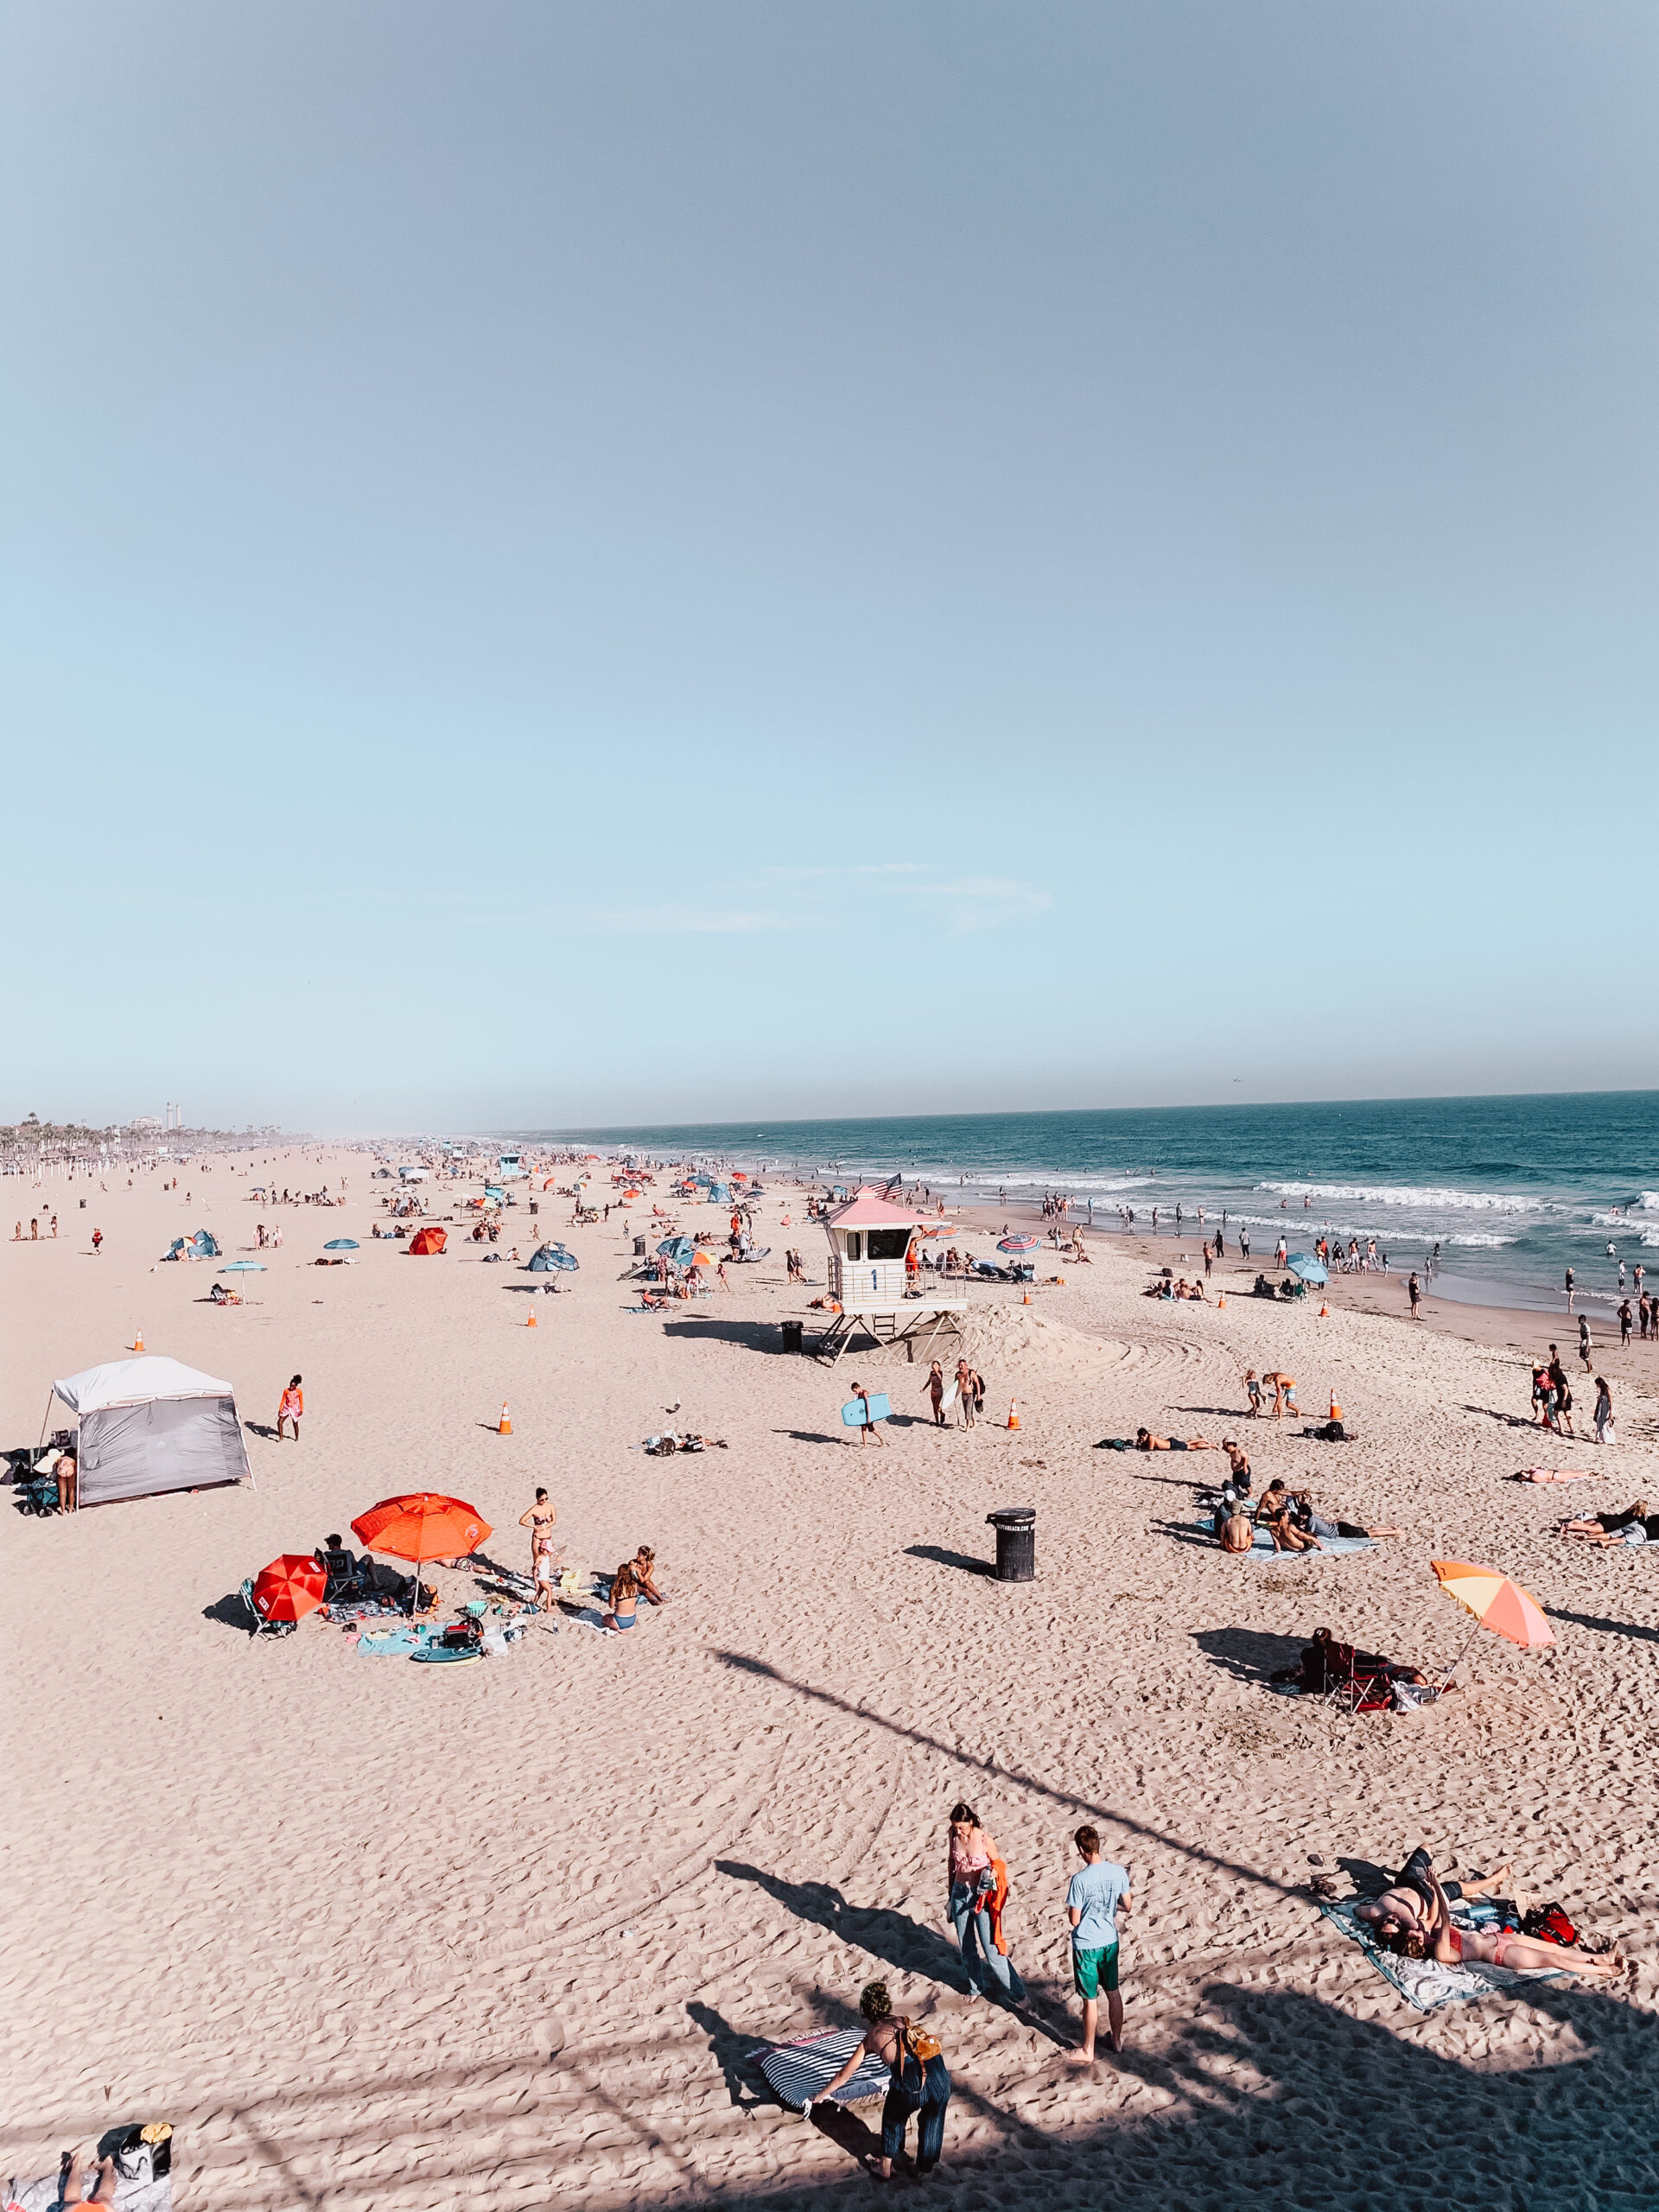 pslilyboutique-on-instagram-beach-umbrellas-sandy-pacific-coast-huntington-beach-IMG_1102